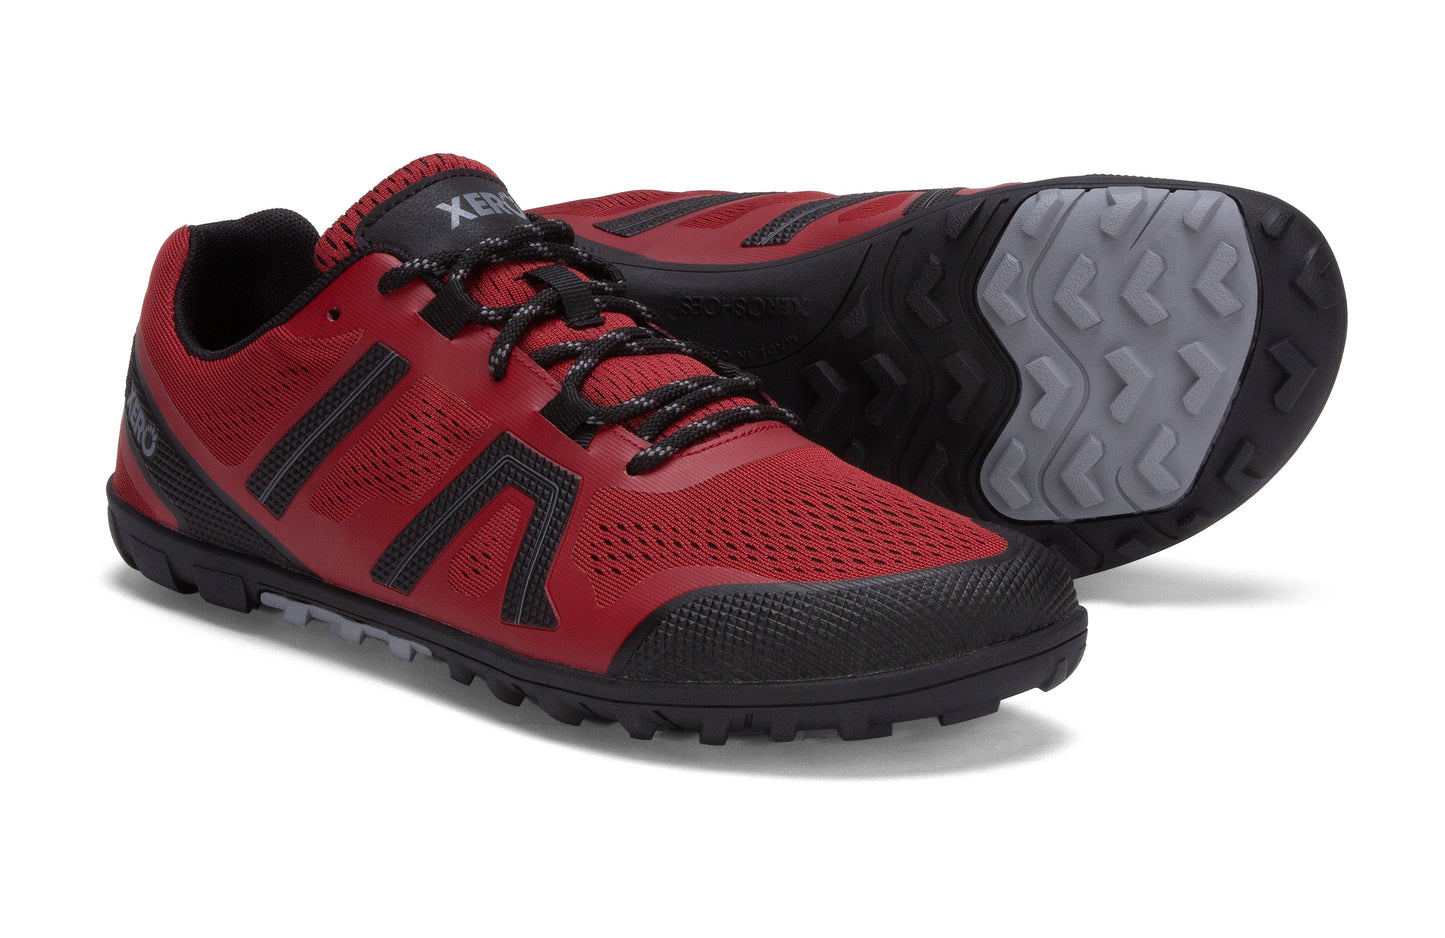 Xero Shoes Mesa Trail II Mens barfods vandresko til mænd i farven moab red, par